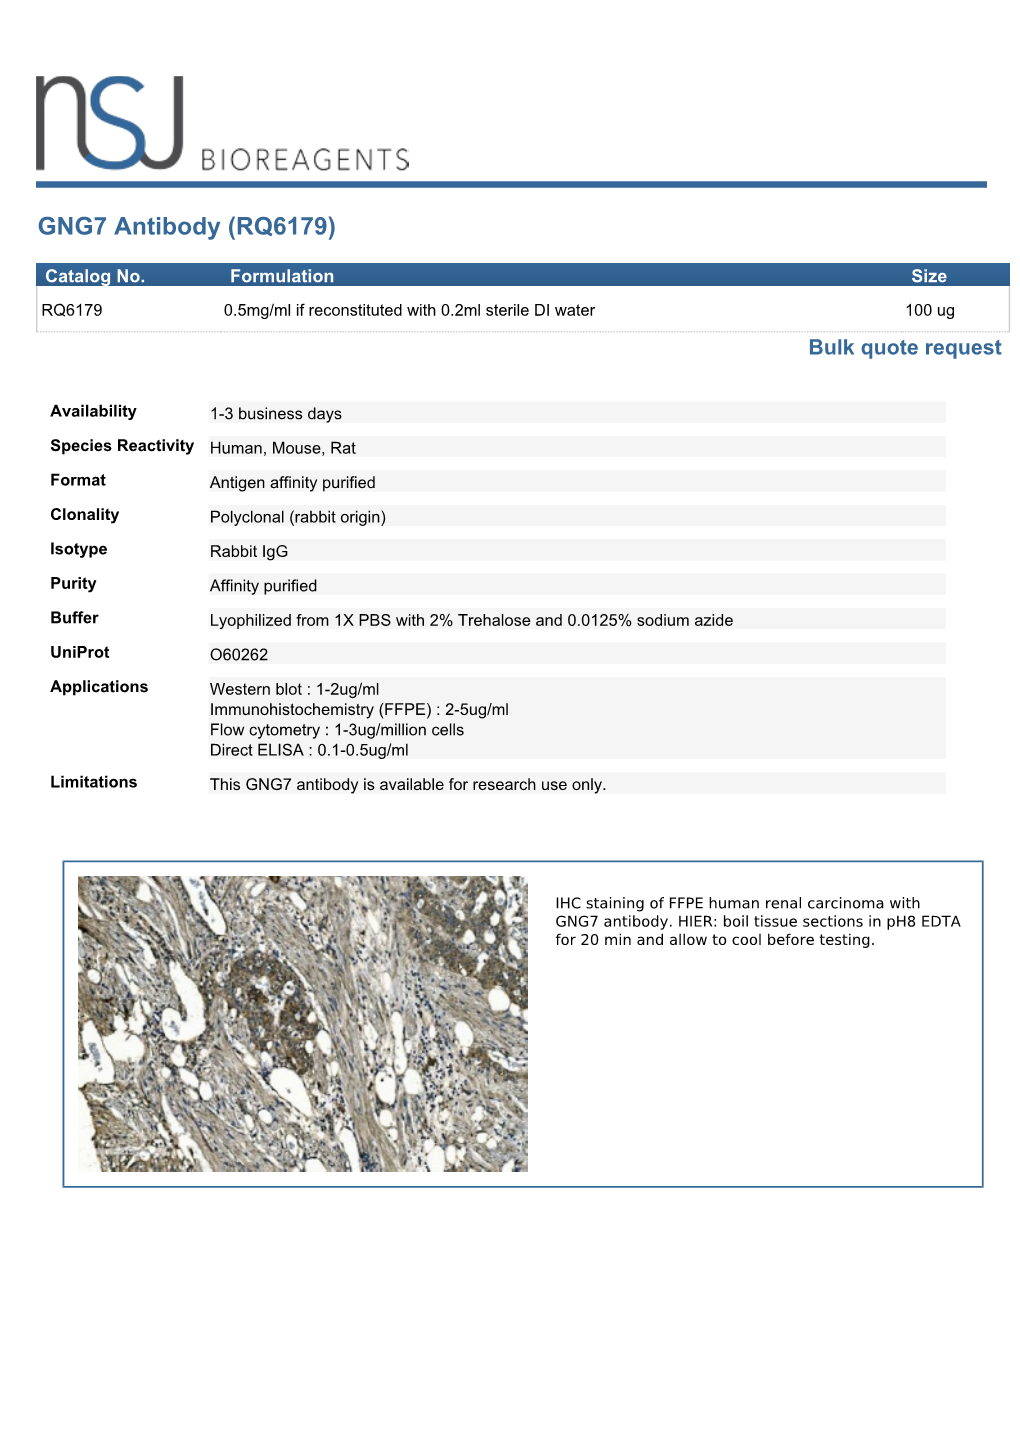 GNG7 Antibody (RQ6179)